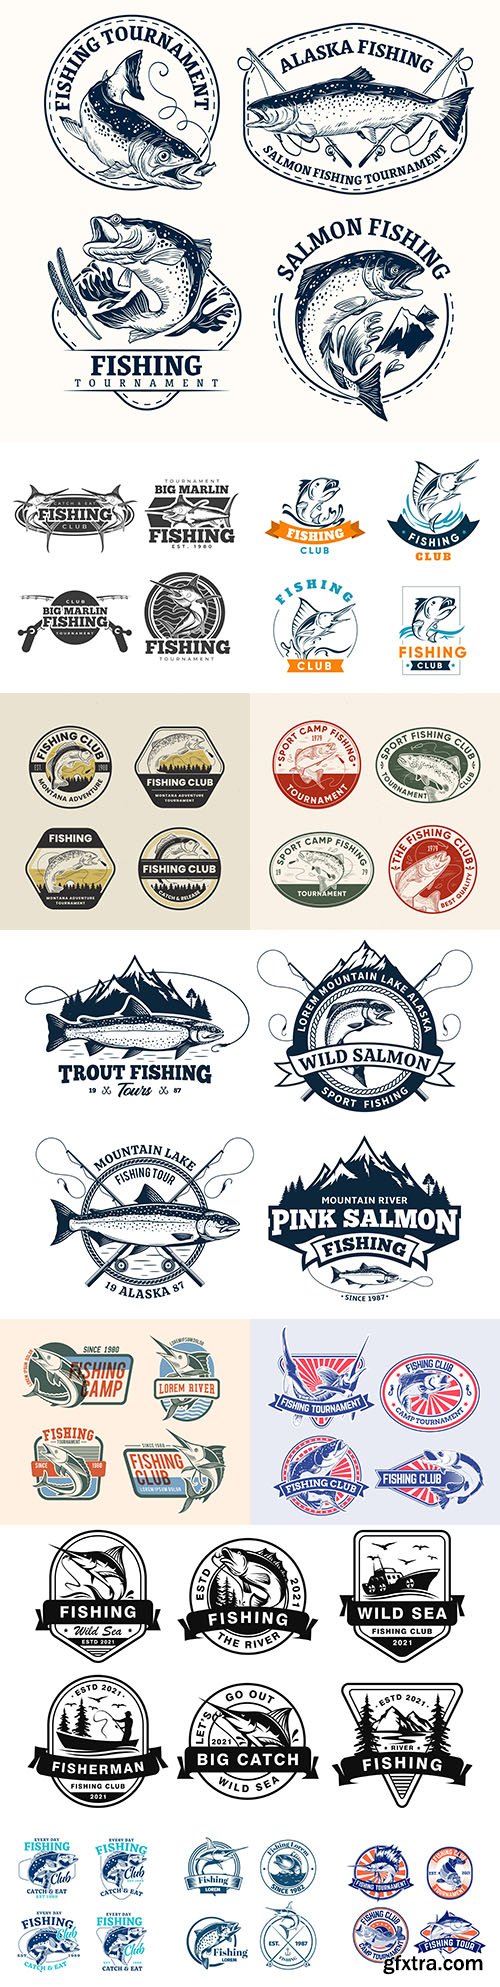 Fishing logos design brand name company corporate